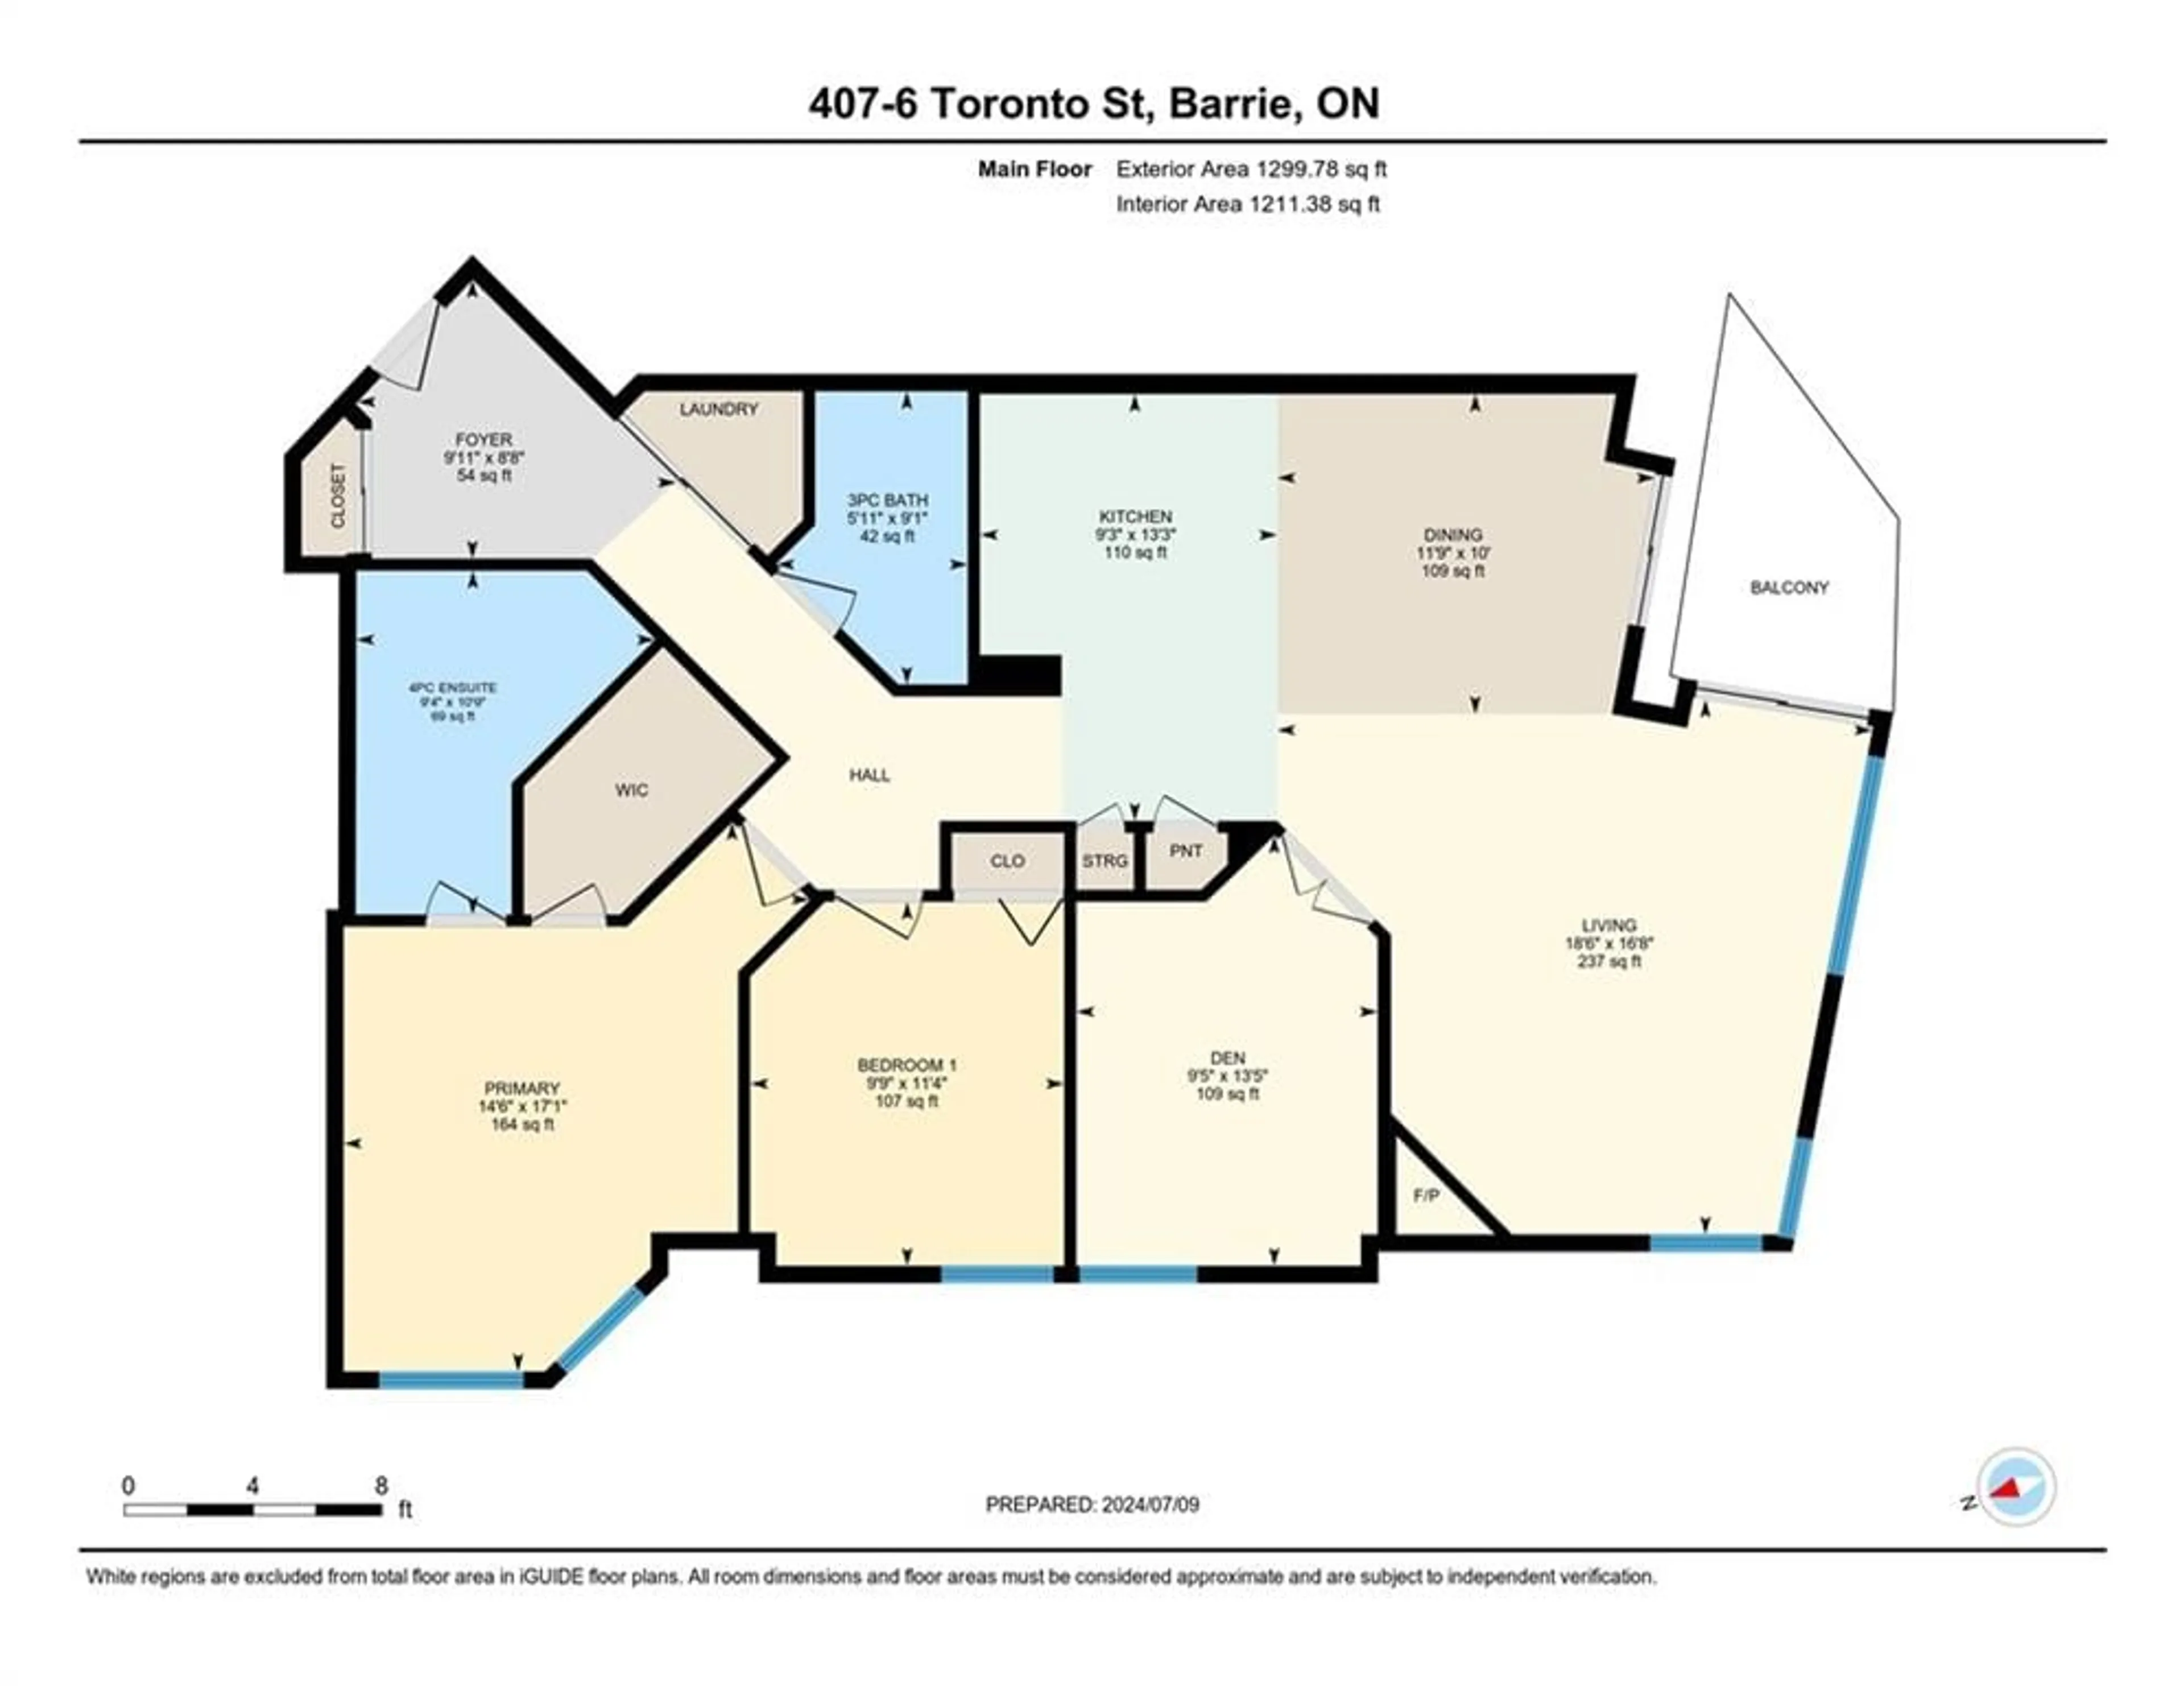 Floor plan for 6 Toronto St #407, Barrie Ontario L4N 9R2